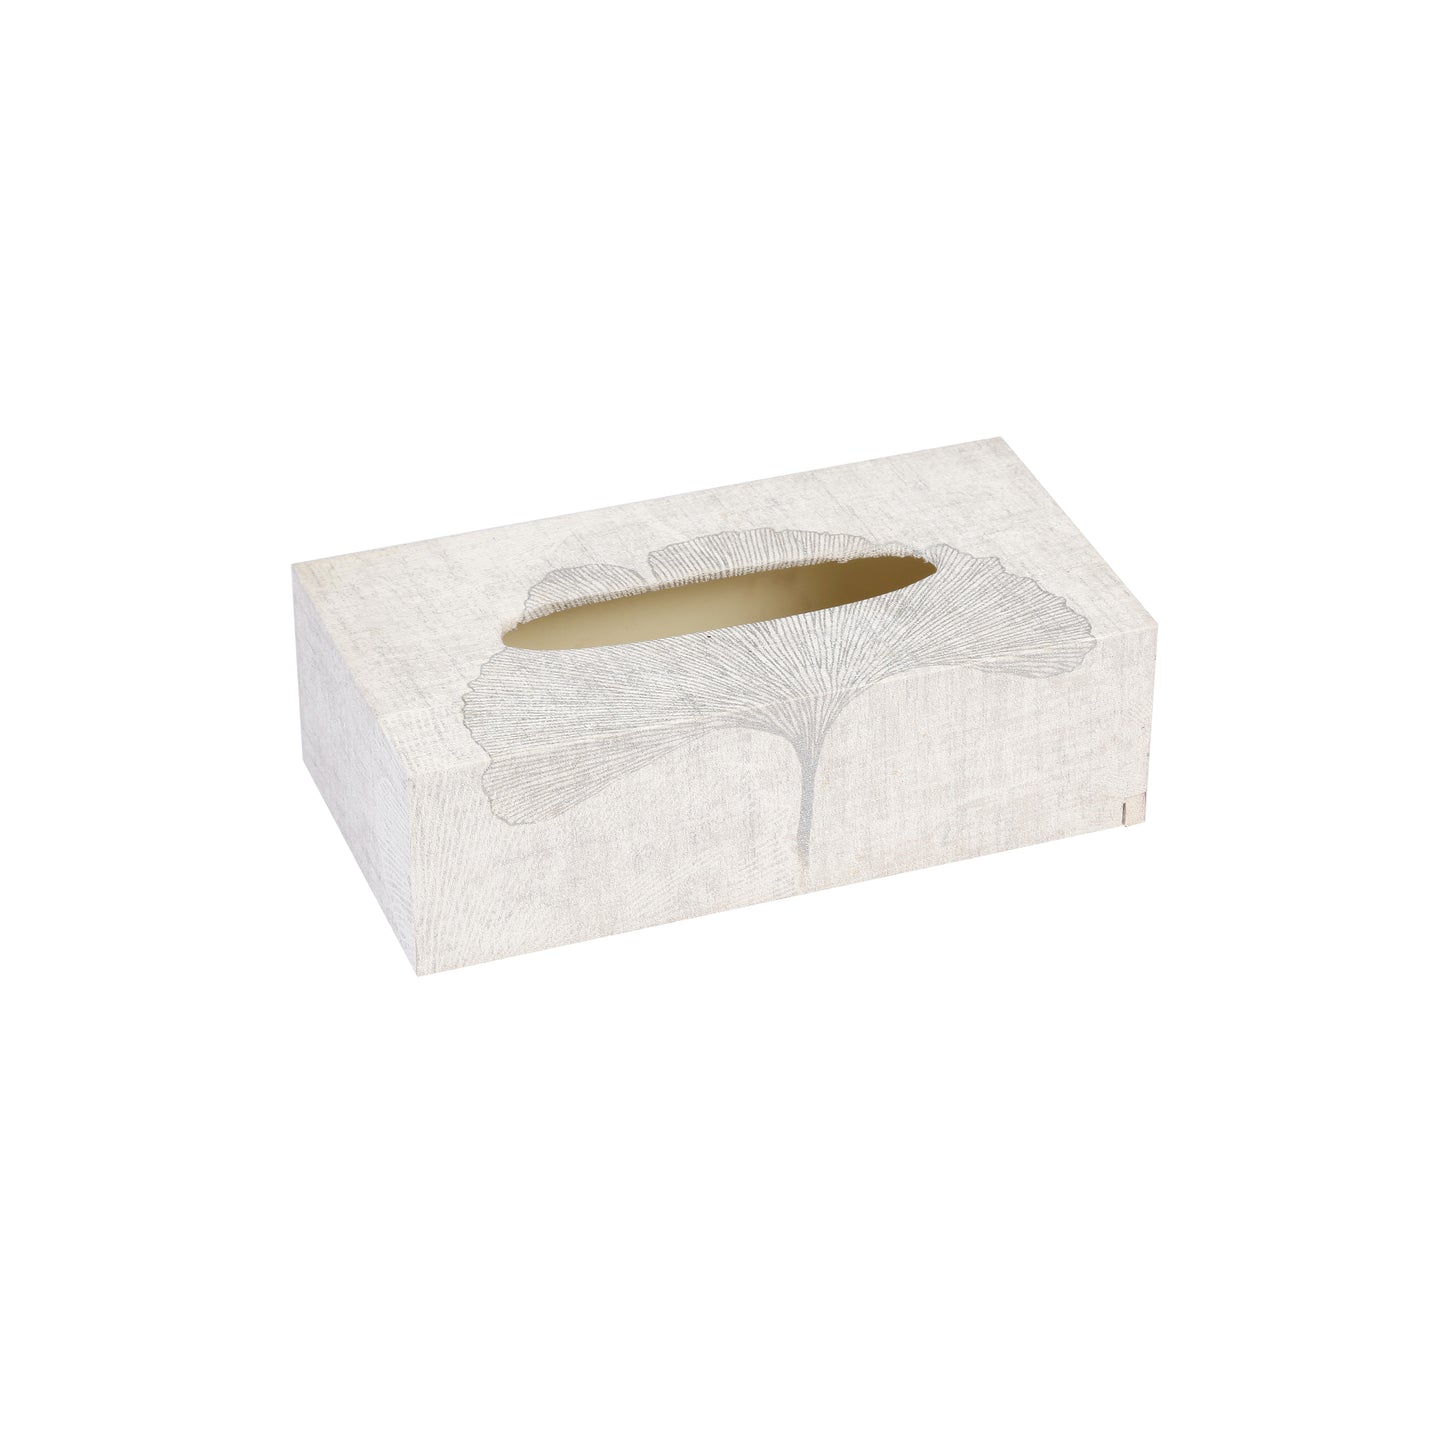 A Tiny Mistake Silver Blossom Rectangle Tissue Box, 26 x 13 x 8 cm